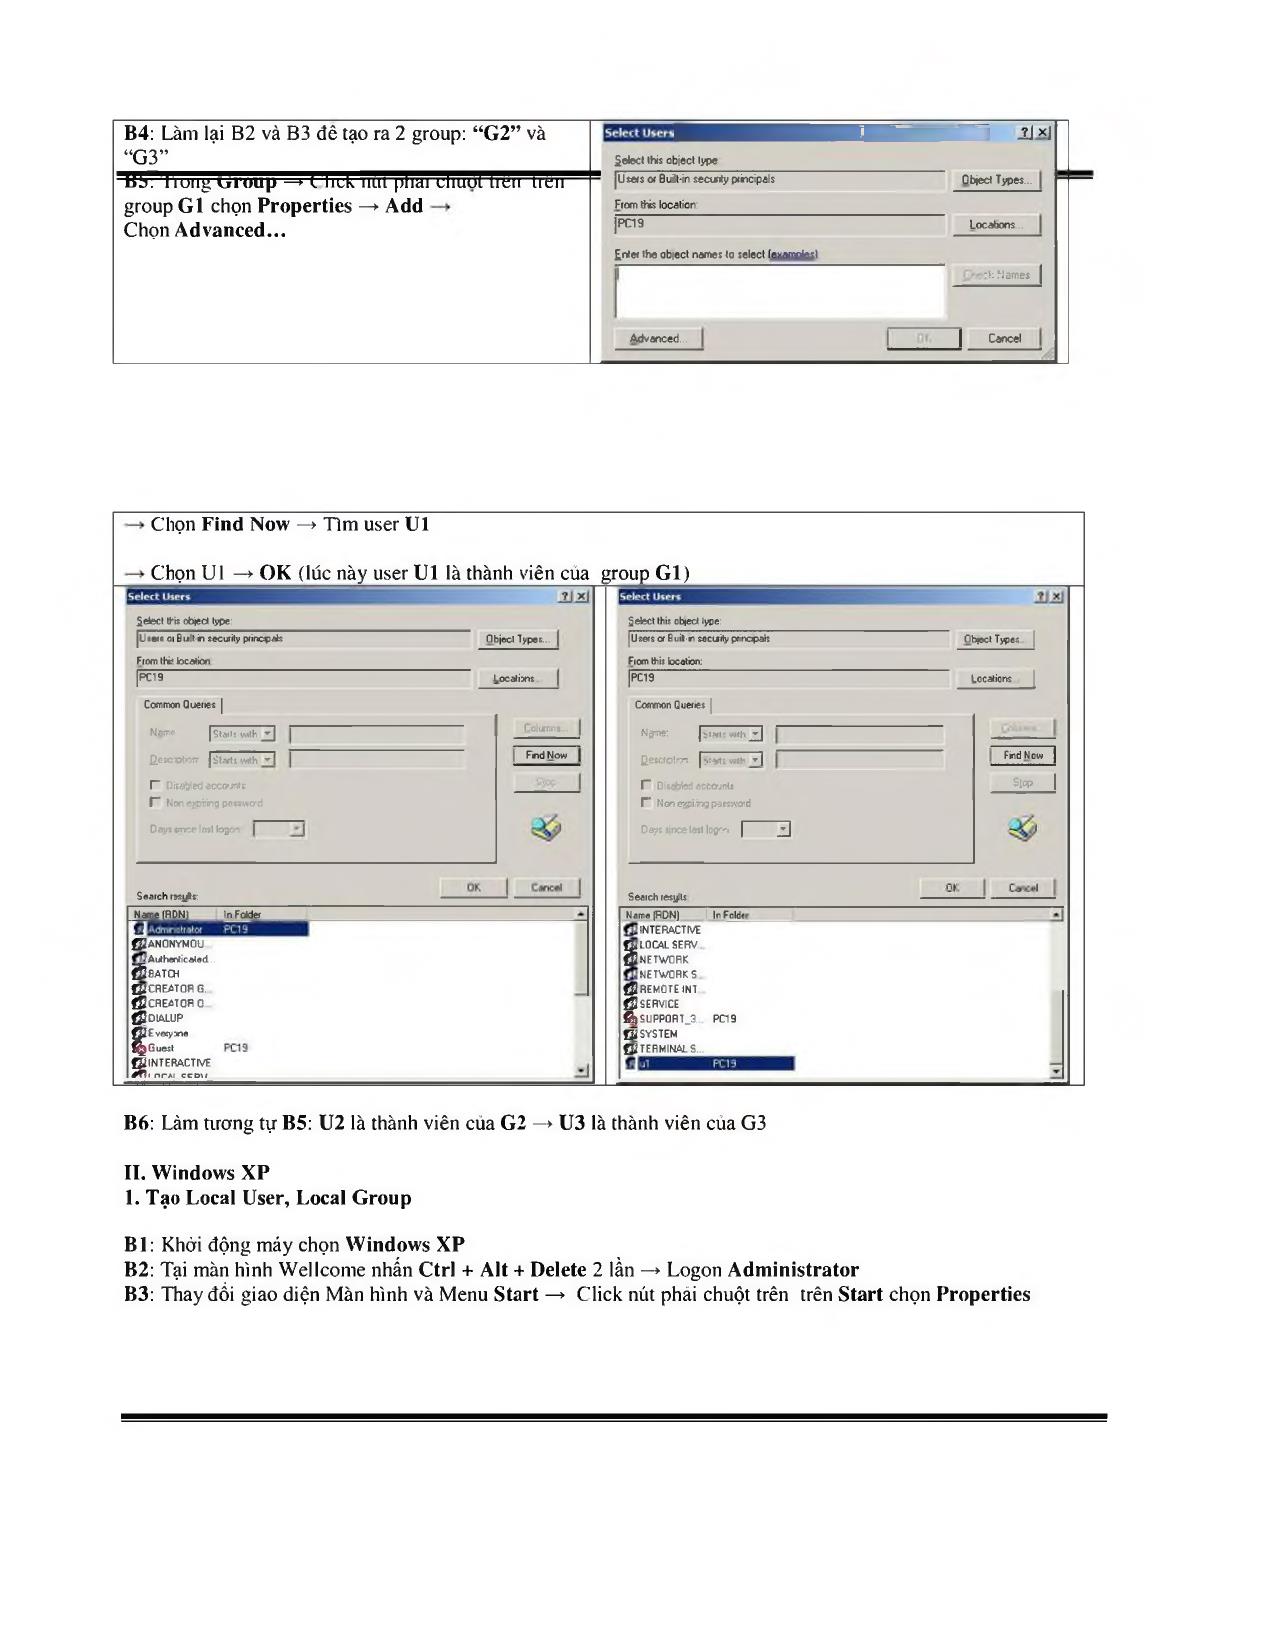 Windows Server 2003 trang 4